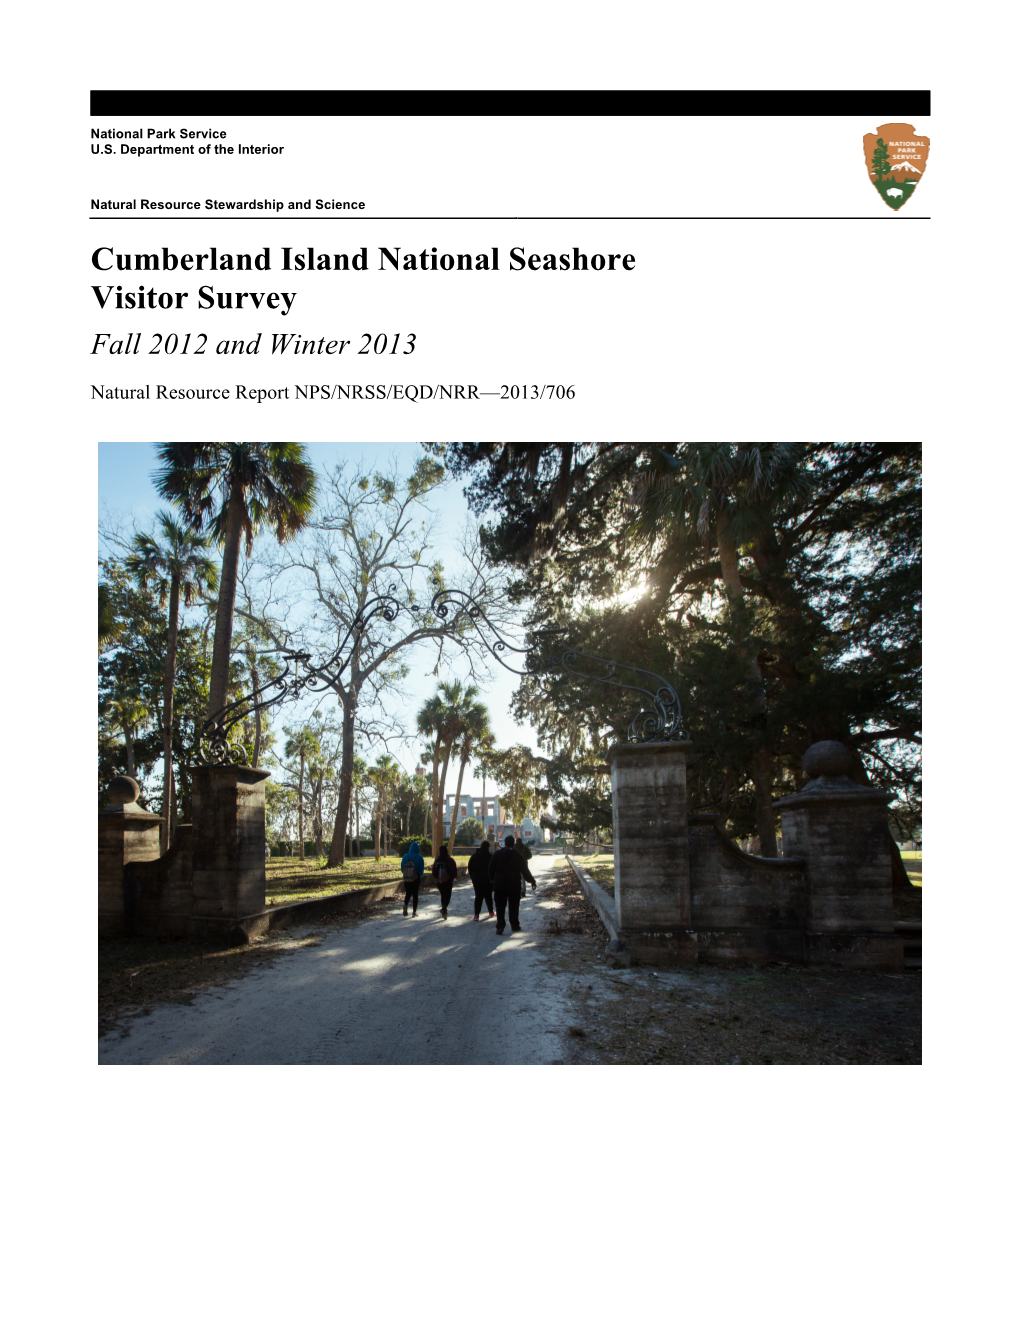 Cumberland Island National Seashore Visitor Survey Fall 2012 and Winter 2013